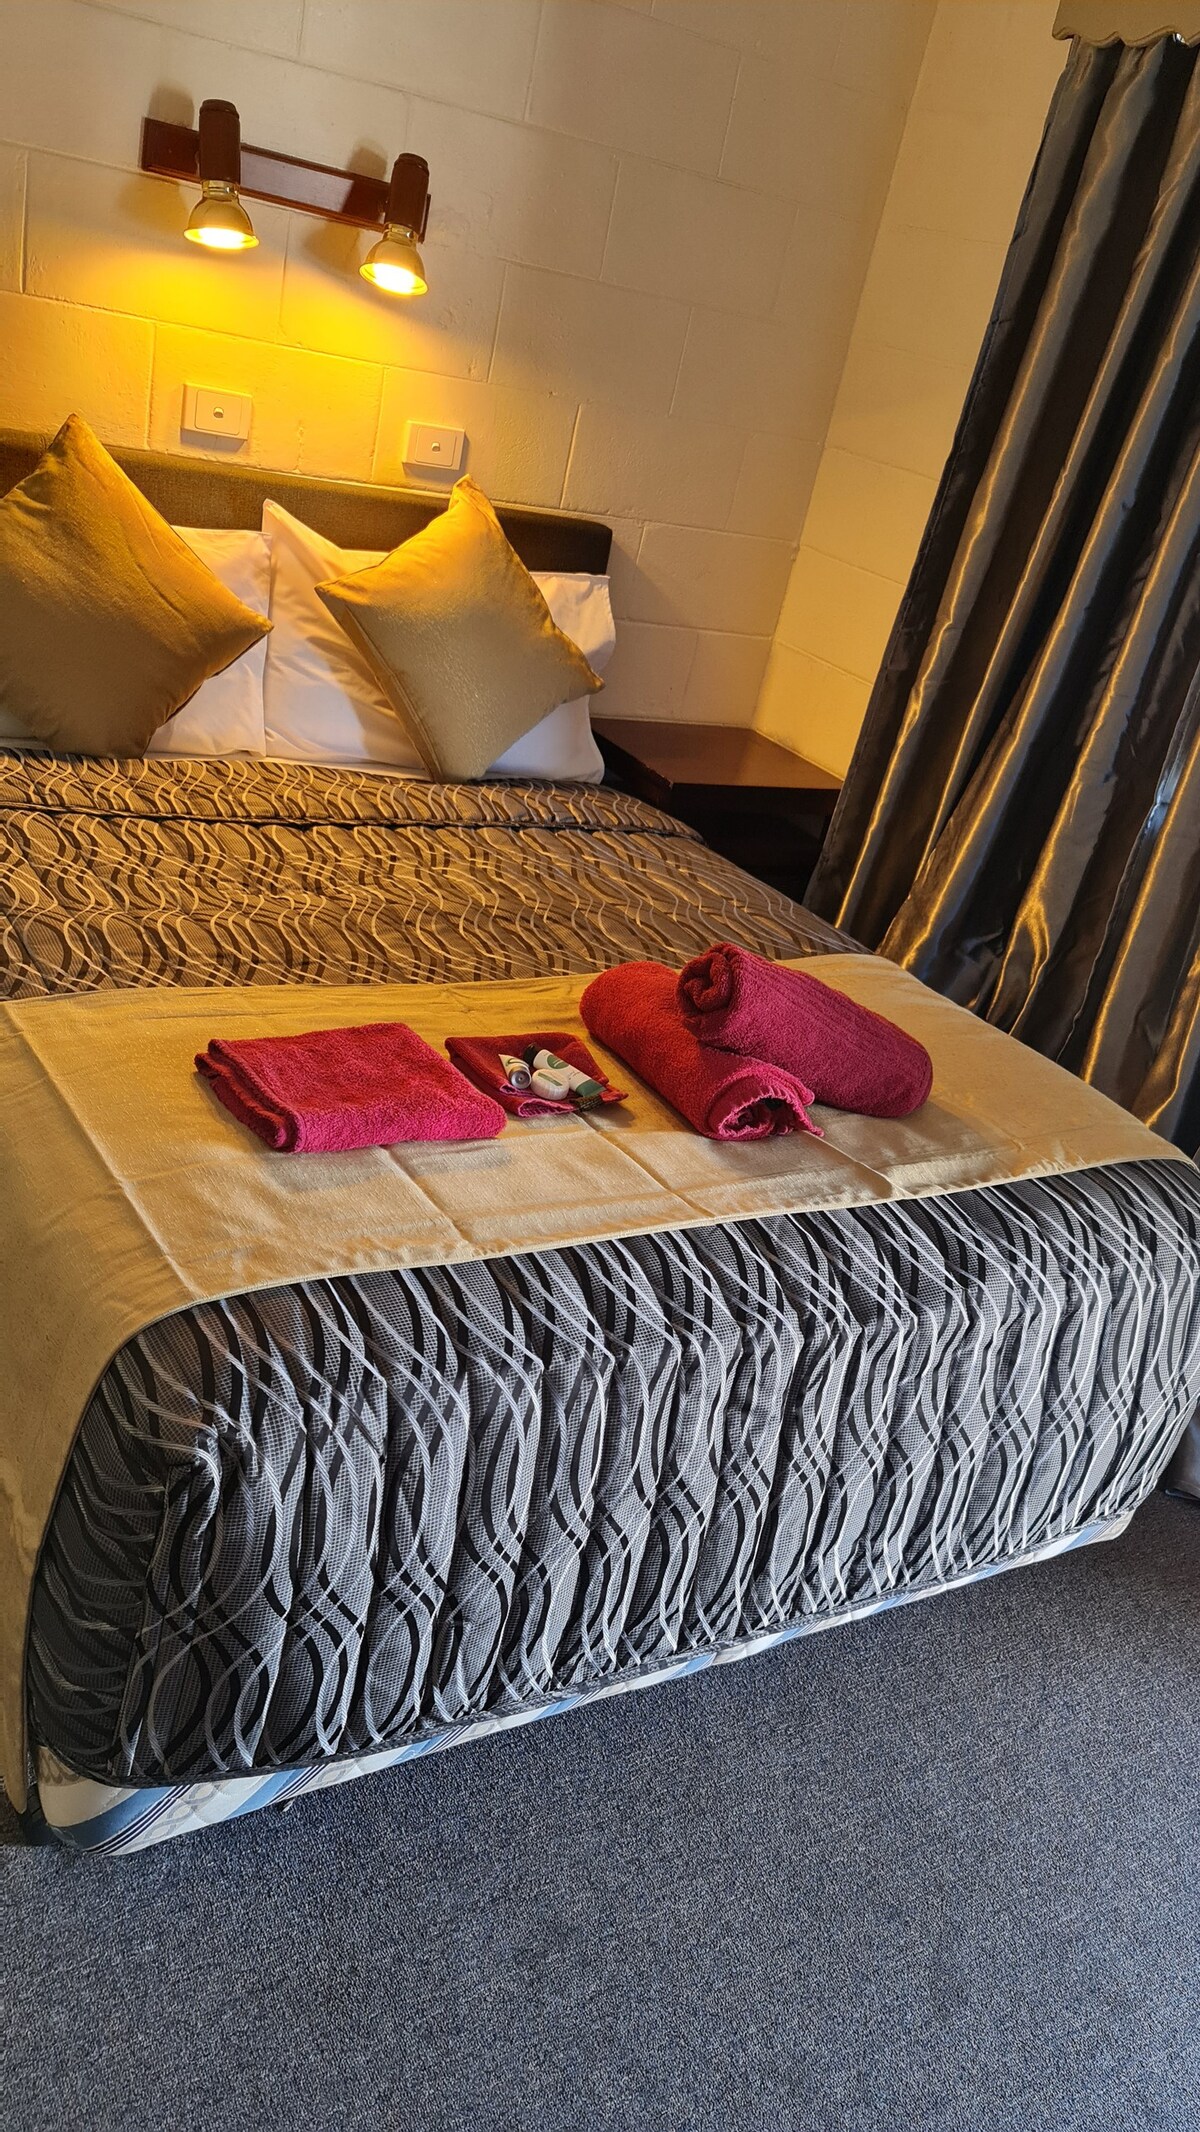 Merriwa Motor Inn best service with clean bed